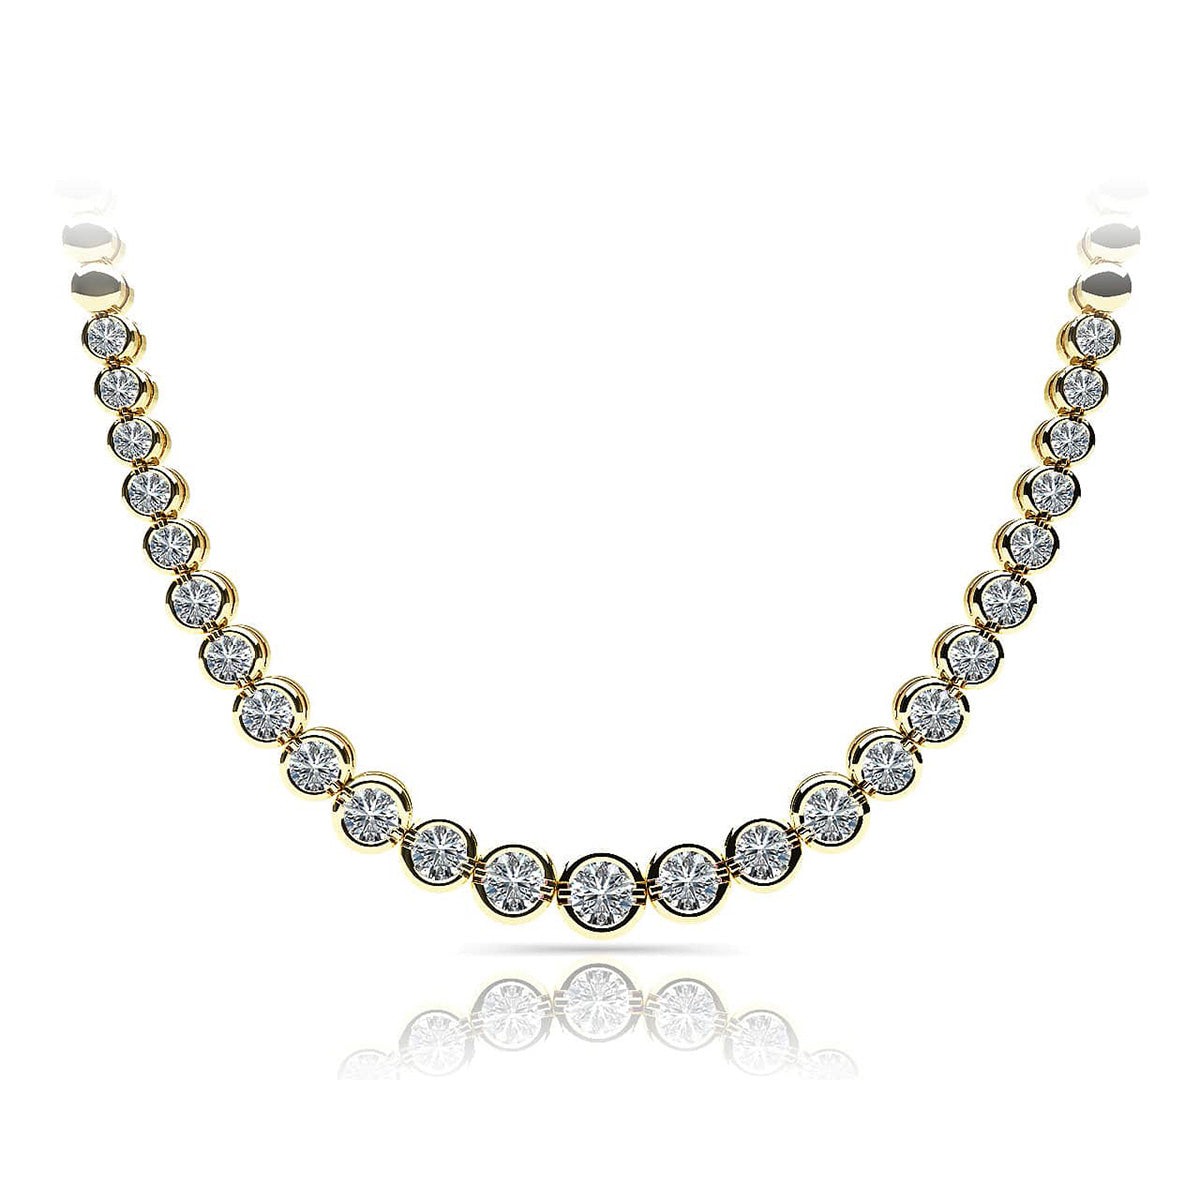 Classic Diamond Strand Necklace With Shiny Links
